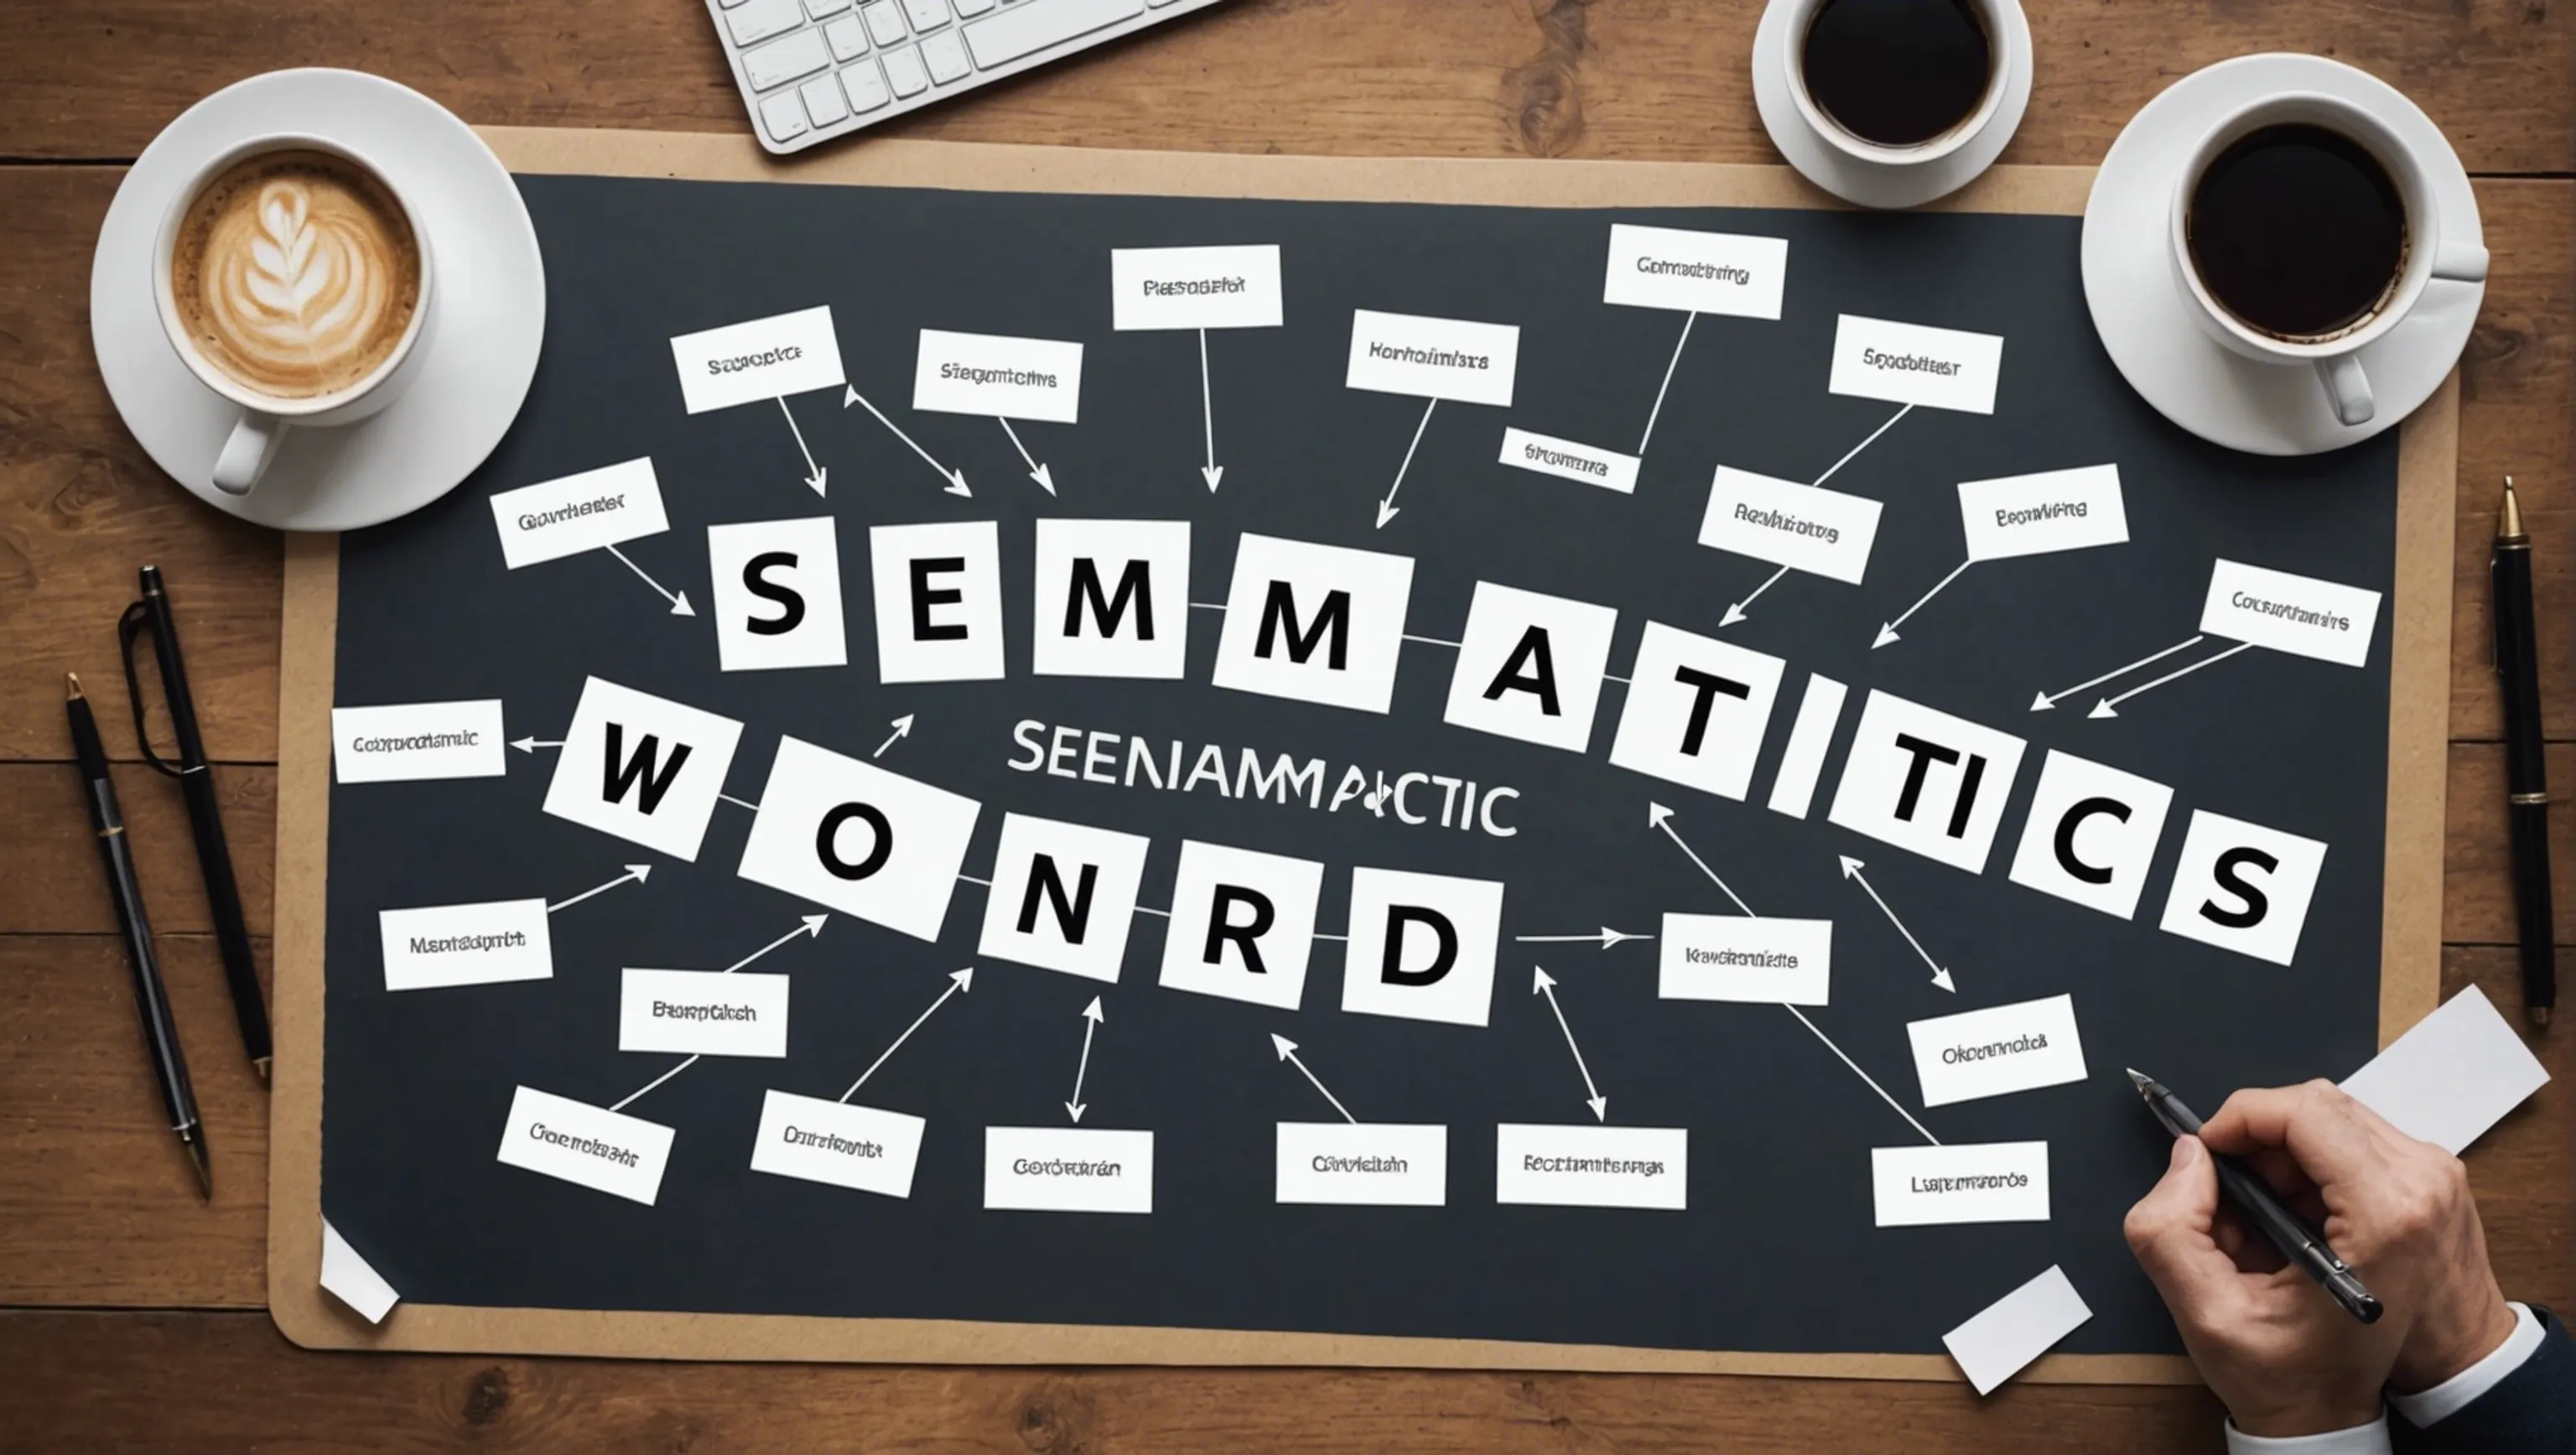 Using Semantic Keywords for Content Optimization